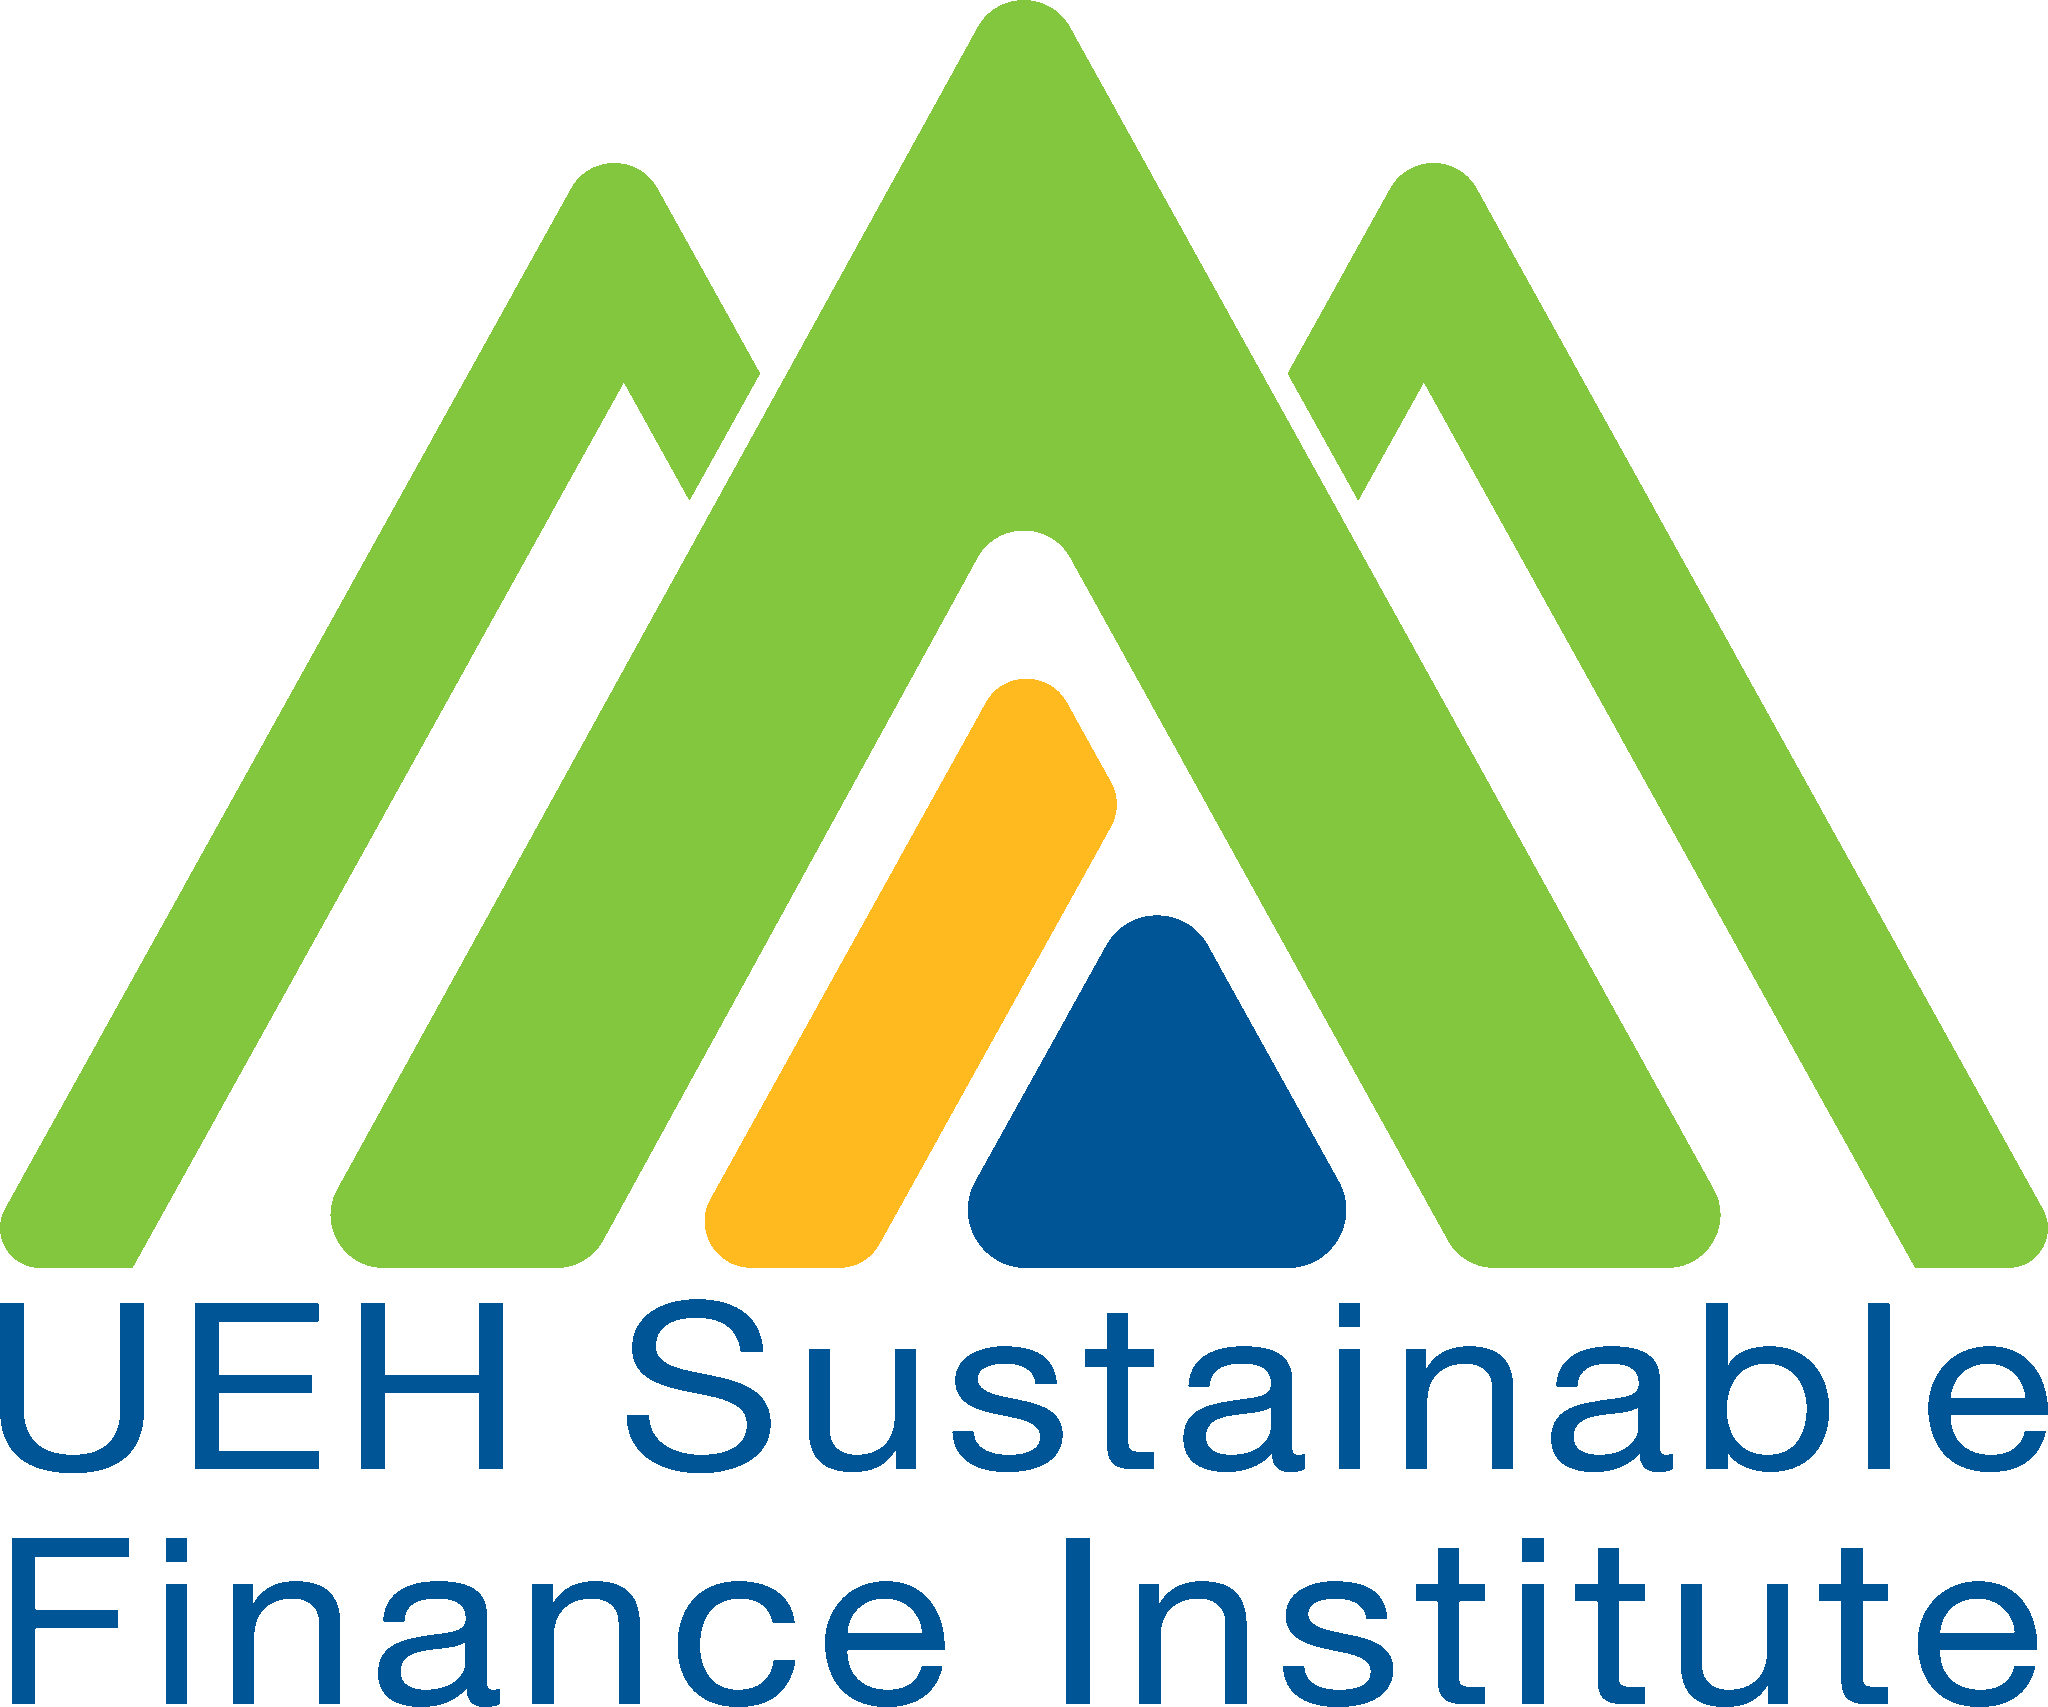 UEH Sustainable Finance Institute